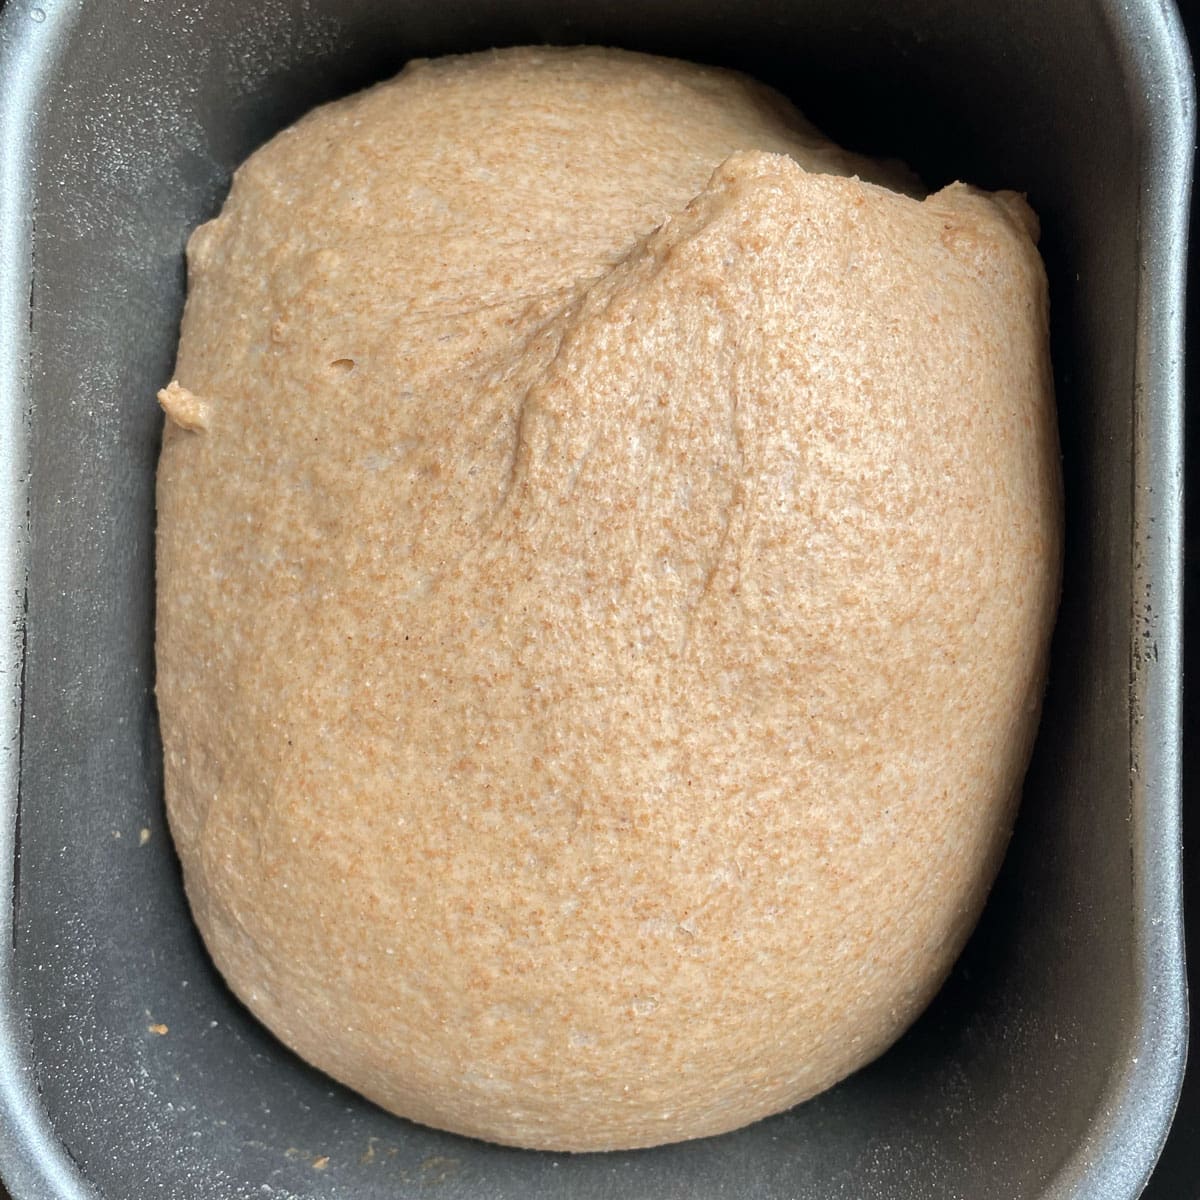 Wheat bread dough rise in bread pan.